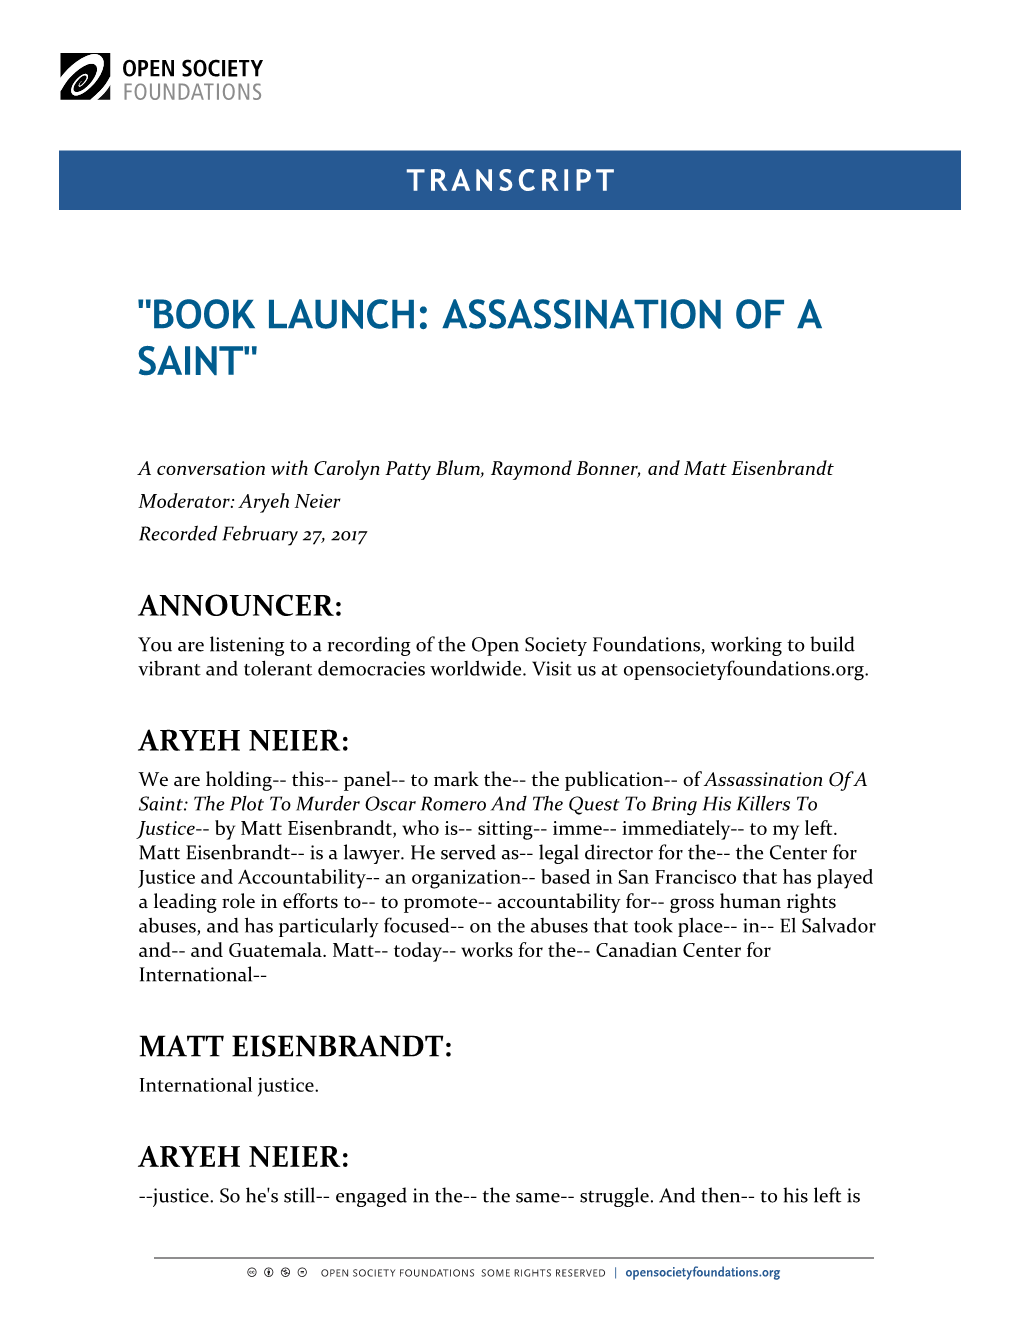 "Book Launch: Assassination of a Saint"